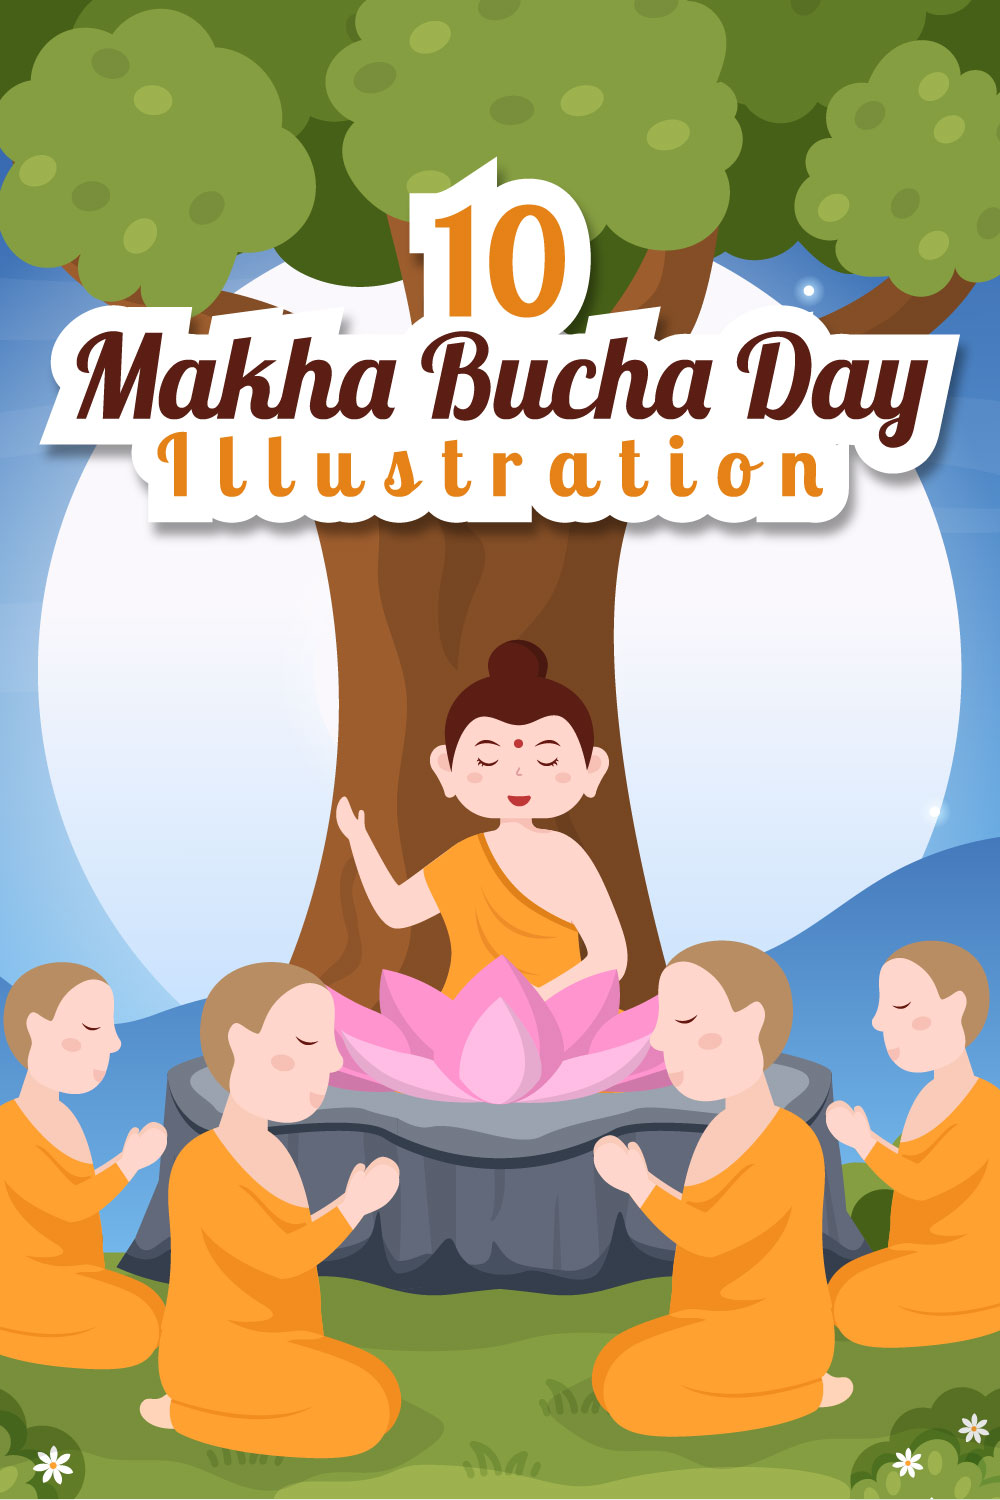 Happy Makha Bucha Day Illustration Pinterest image.